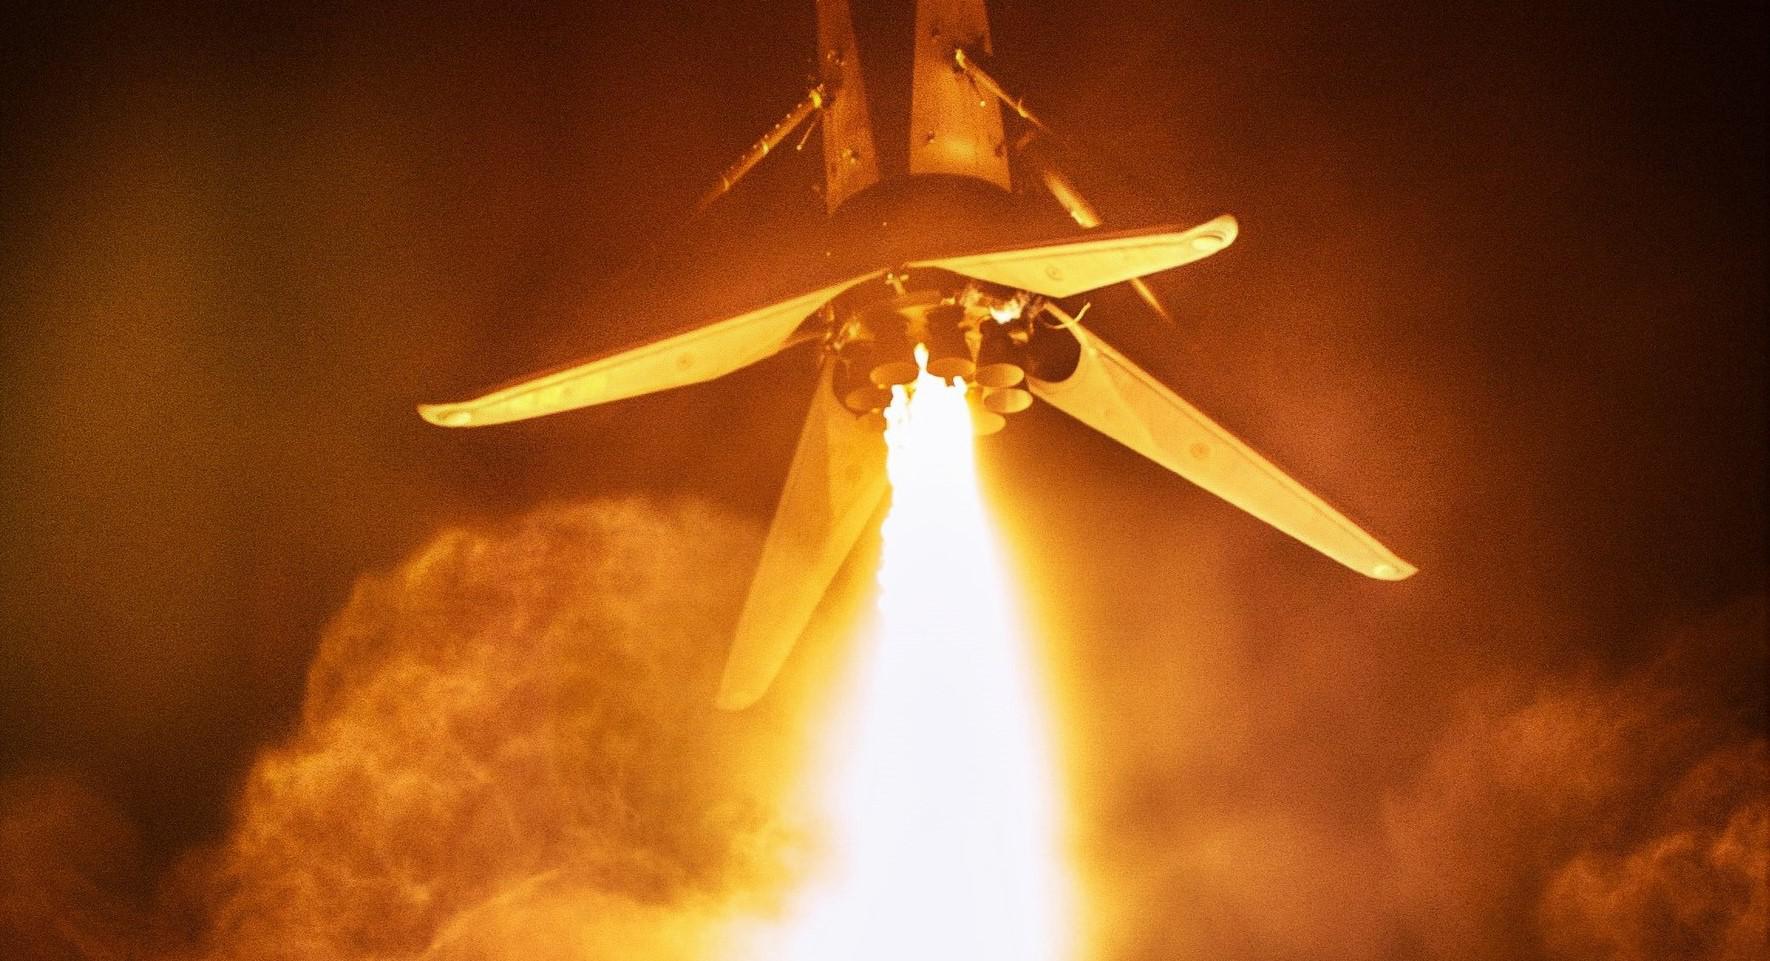 SAOCOM 1A B1048 landing (SpaceX) 1 crop